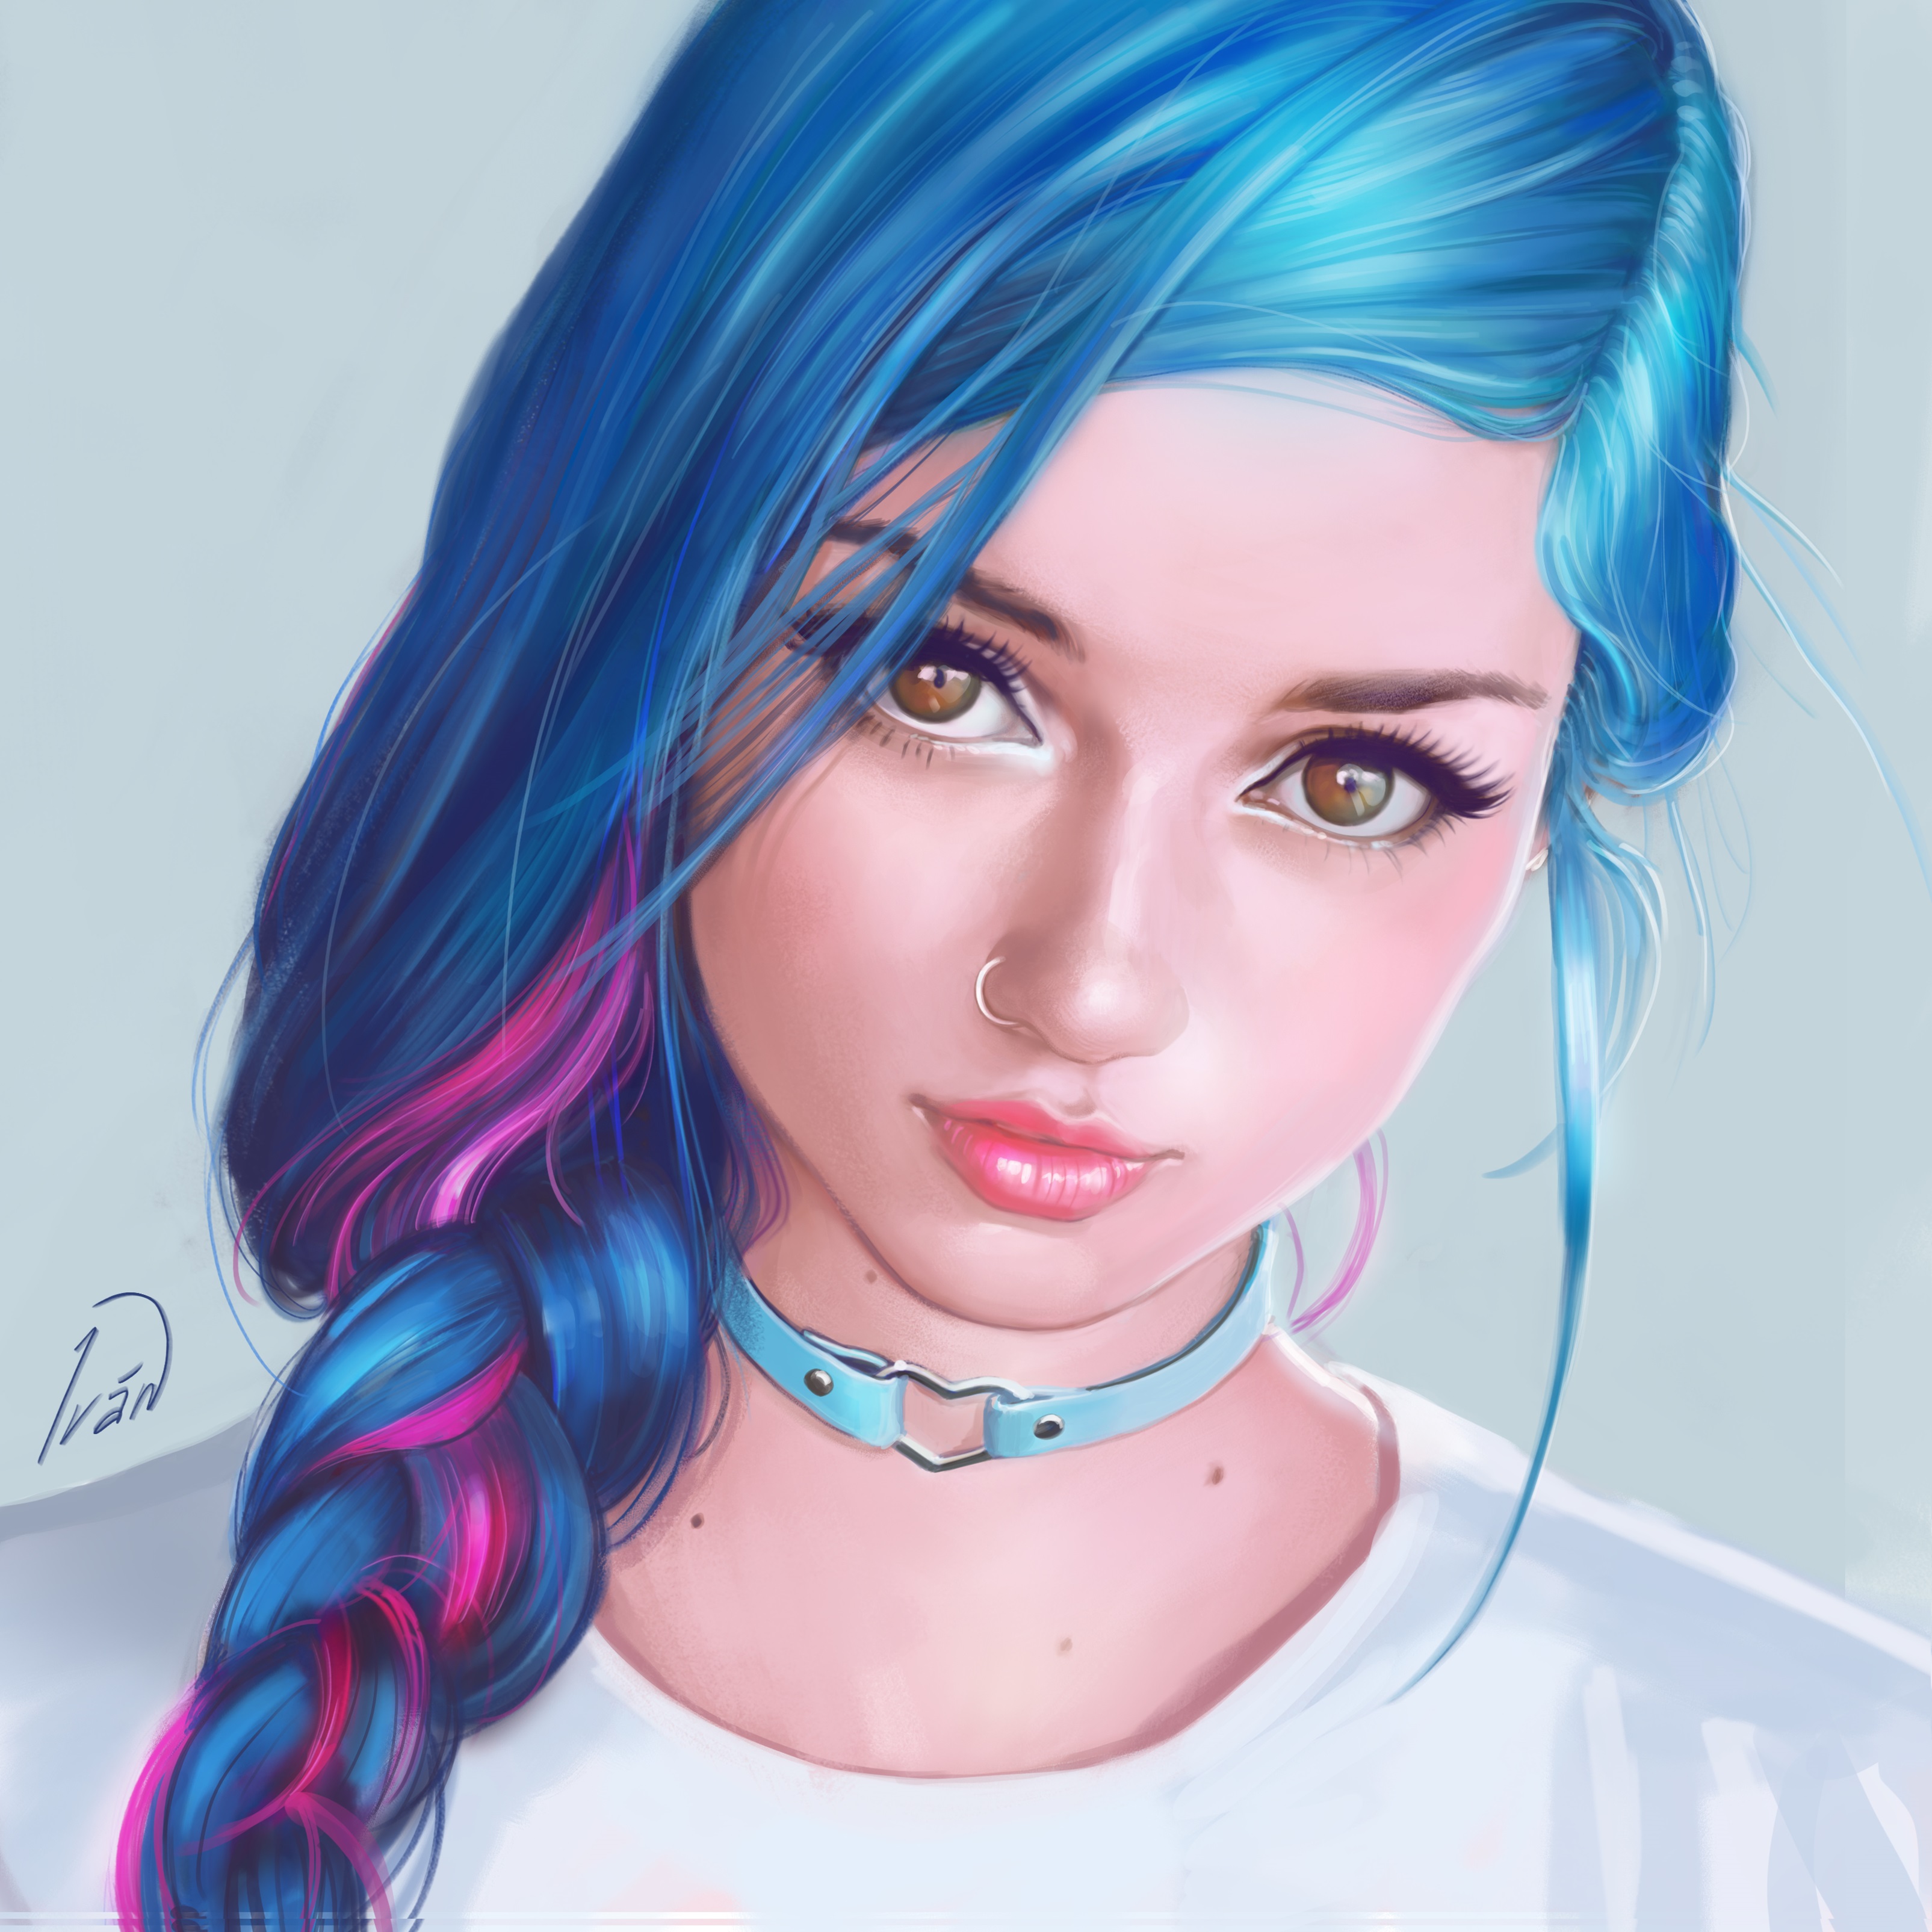 General 3210x3210 digital art women illustration portrait blue hair artwork Vexel light blue braids